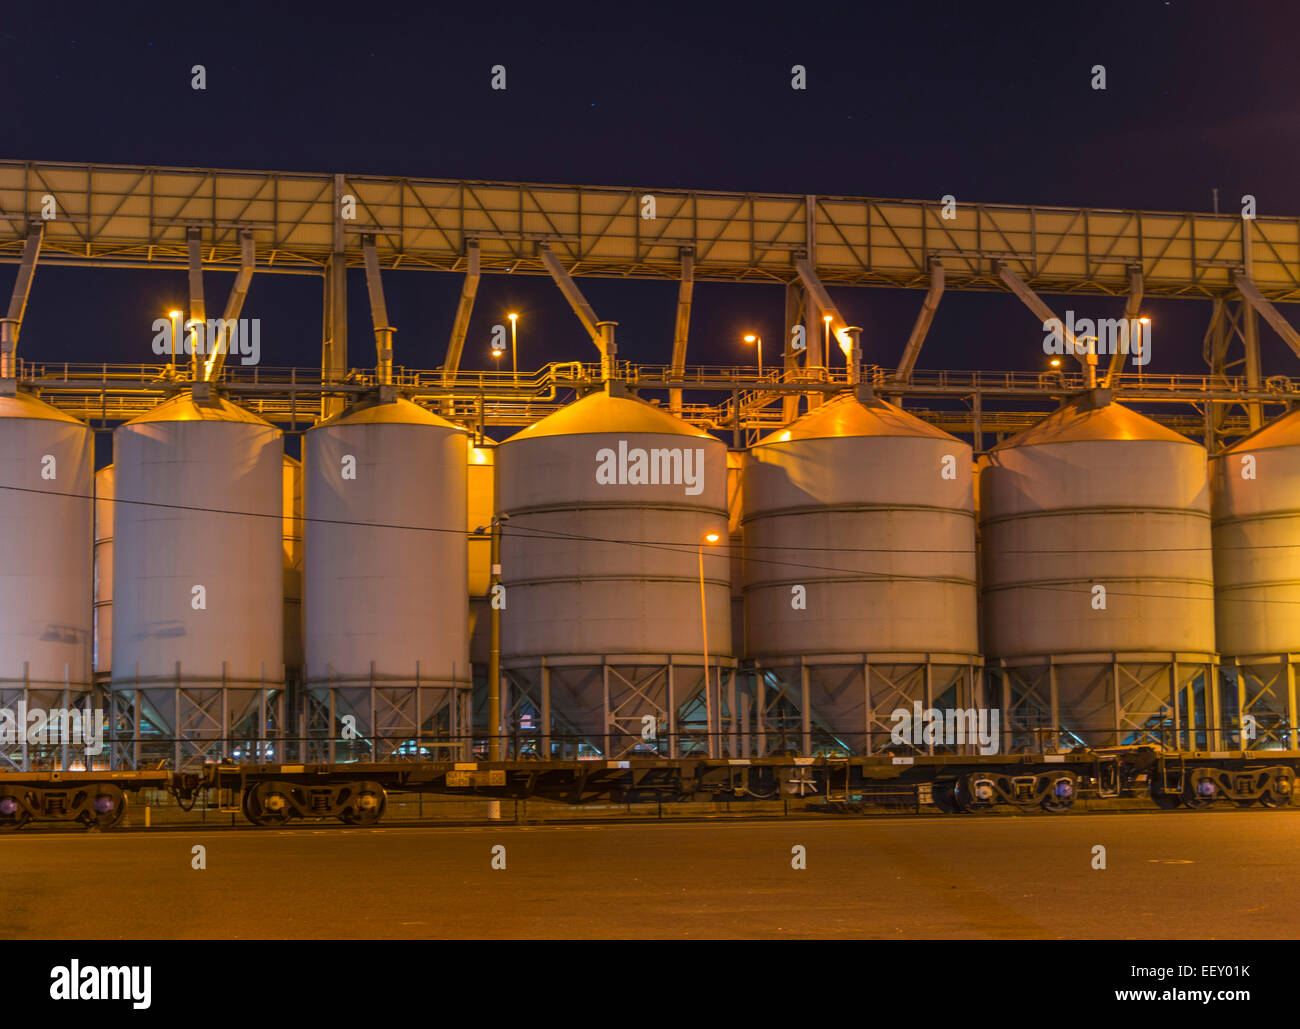 silo barrels iol Stock Photo